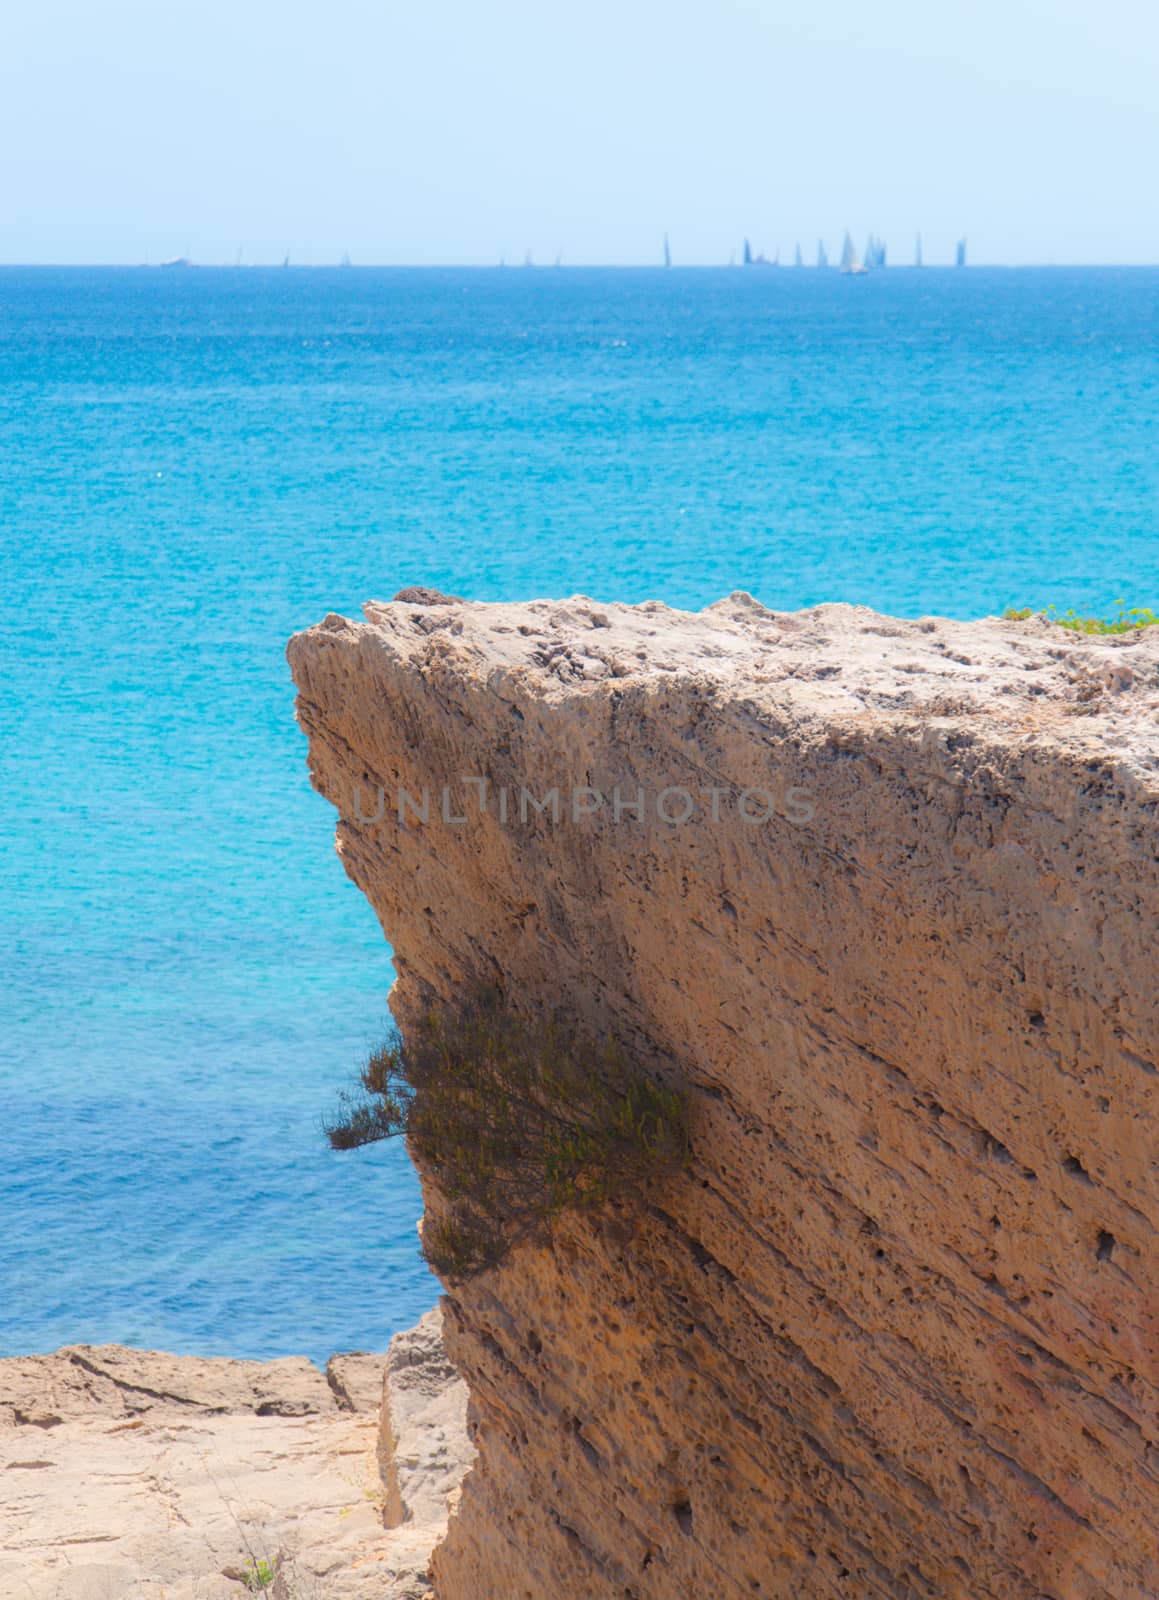 Azure water and yellow limestone cliff in Palma bay, Majorca, Balearic islands, Spain.